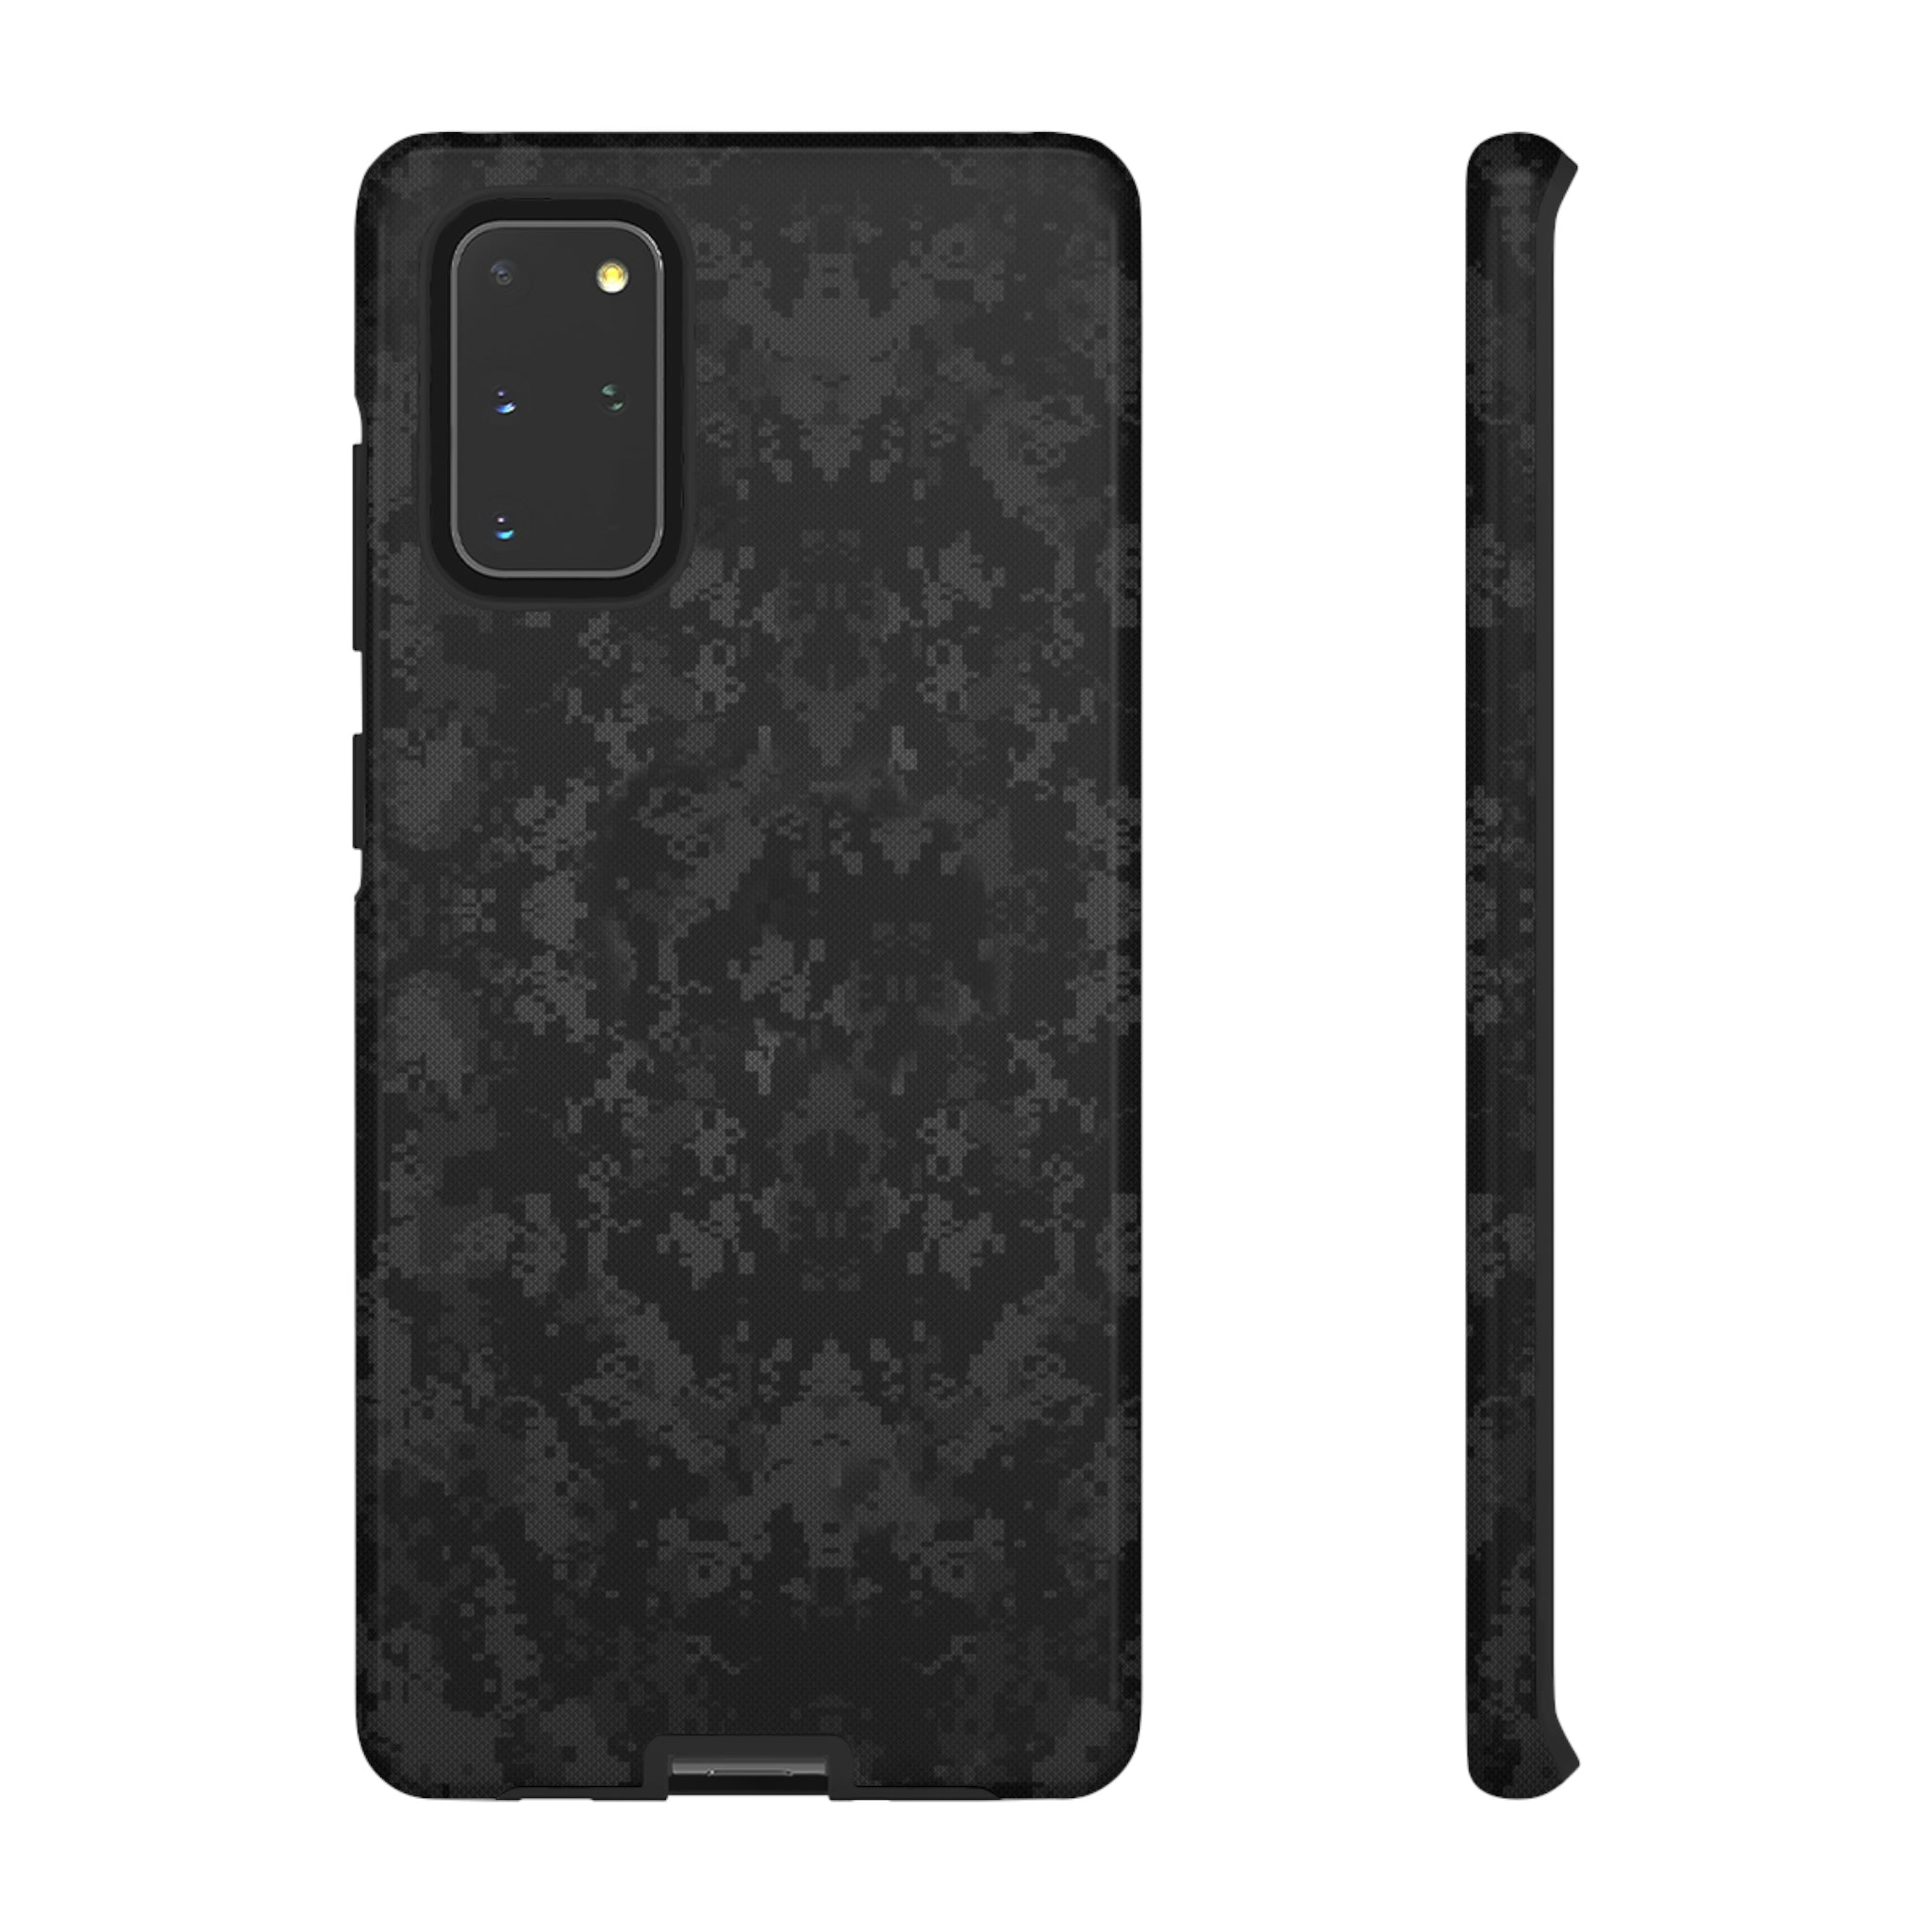 Digital Camo - Dual Layered, Full Body, Armored Phone Case for iPhone 13/Samsung Galaxy S22/Google Pixel 6Smartphone CasesStreamLiteStreamLite